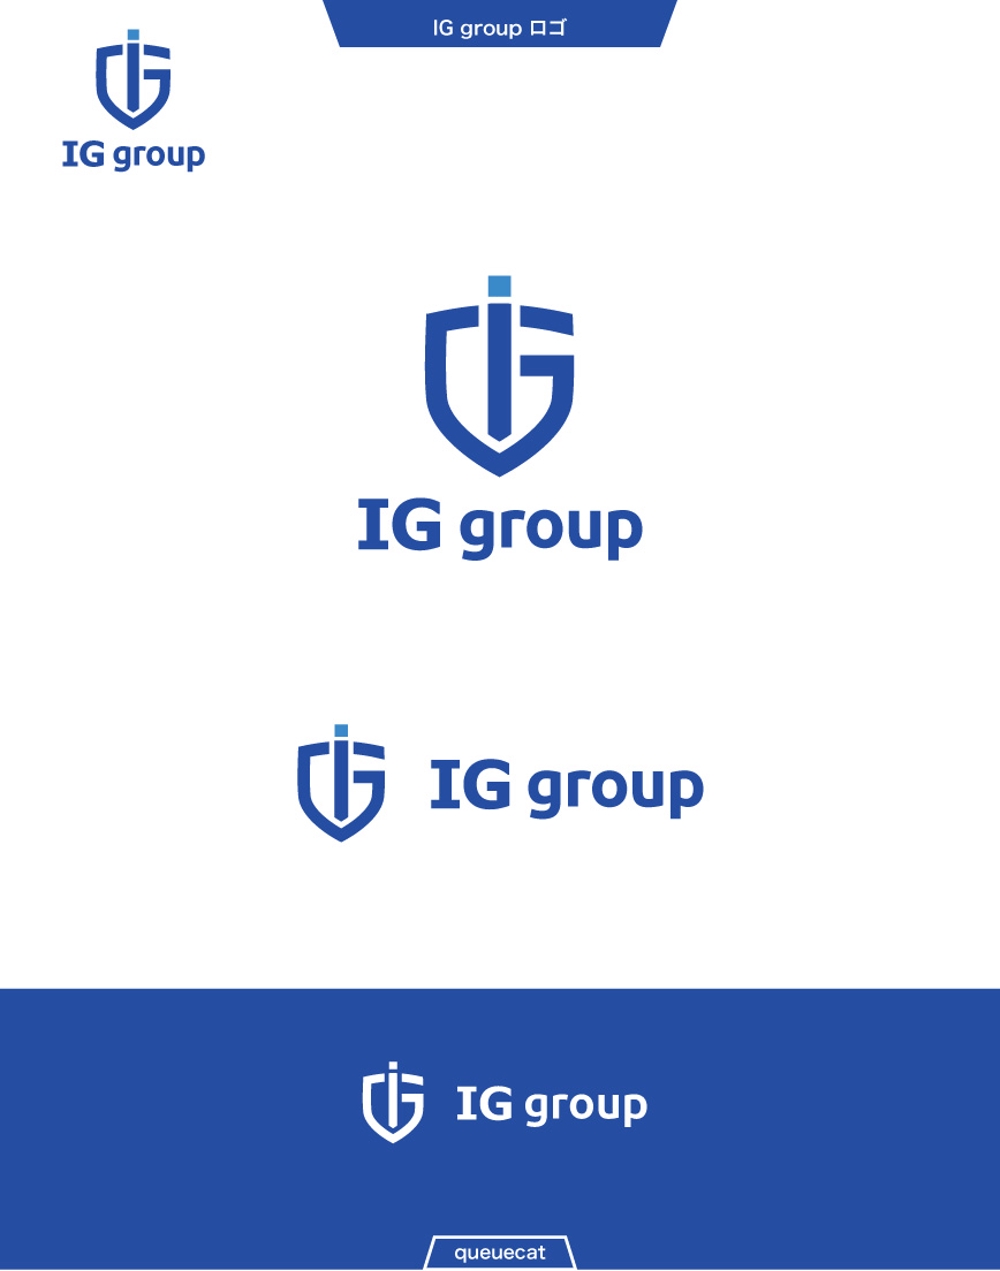 IG group2_1.jpg